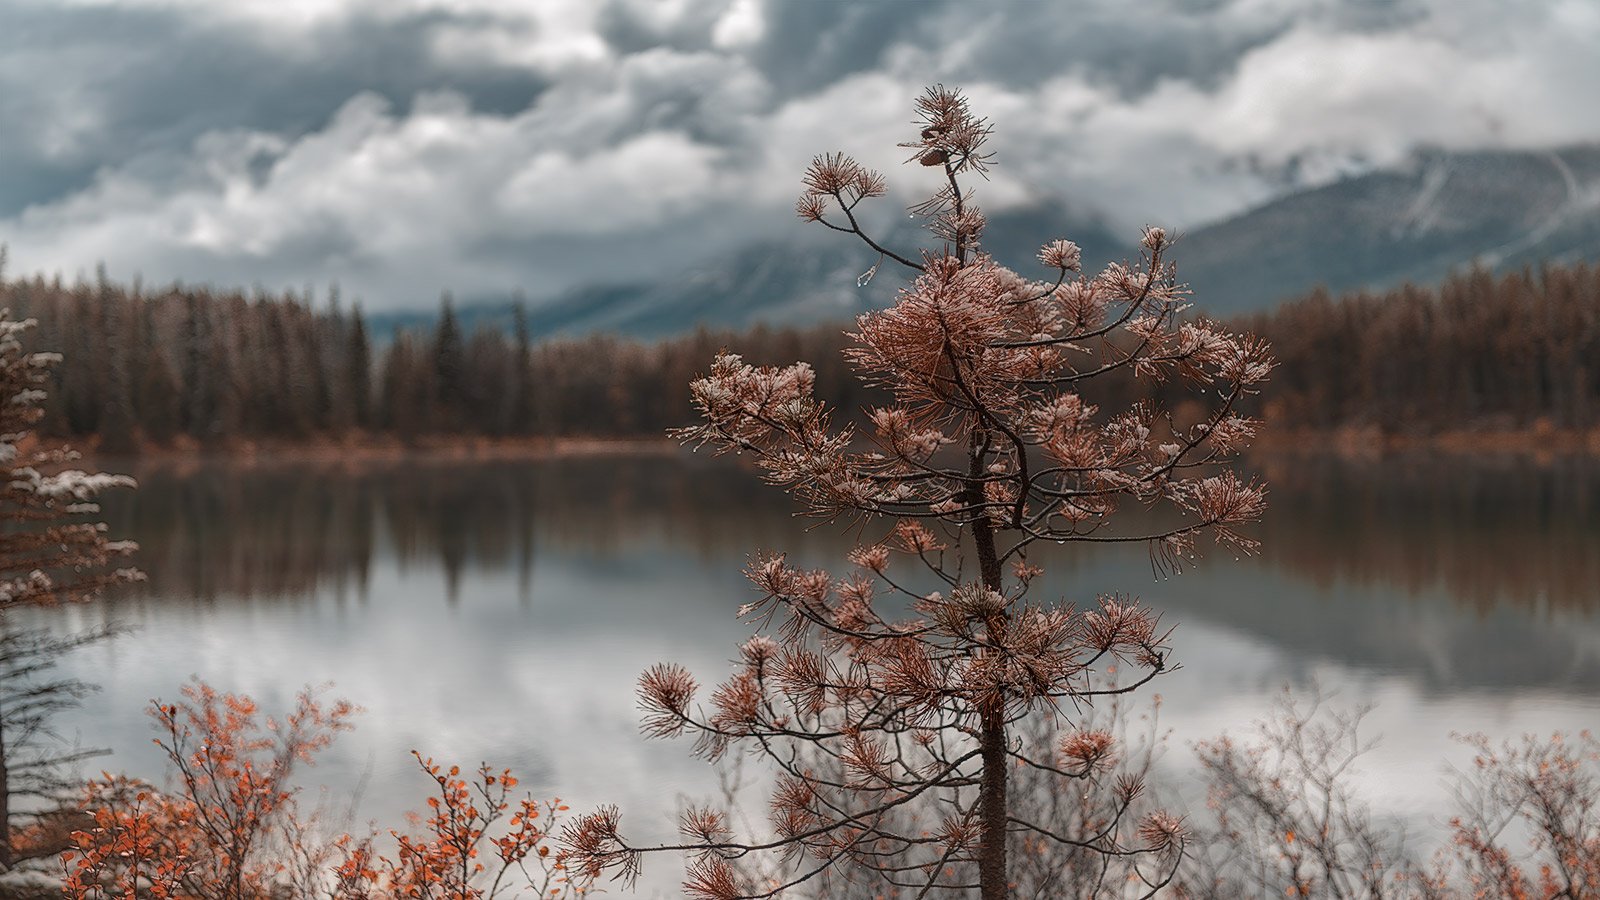 alberta, canada, lake, mountains, @1pro.photo, Emelyanov Alex